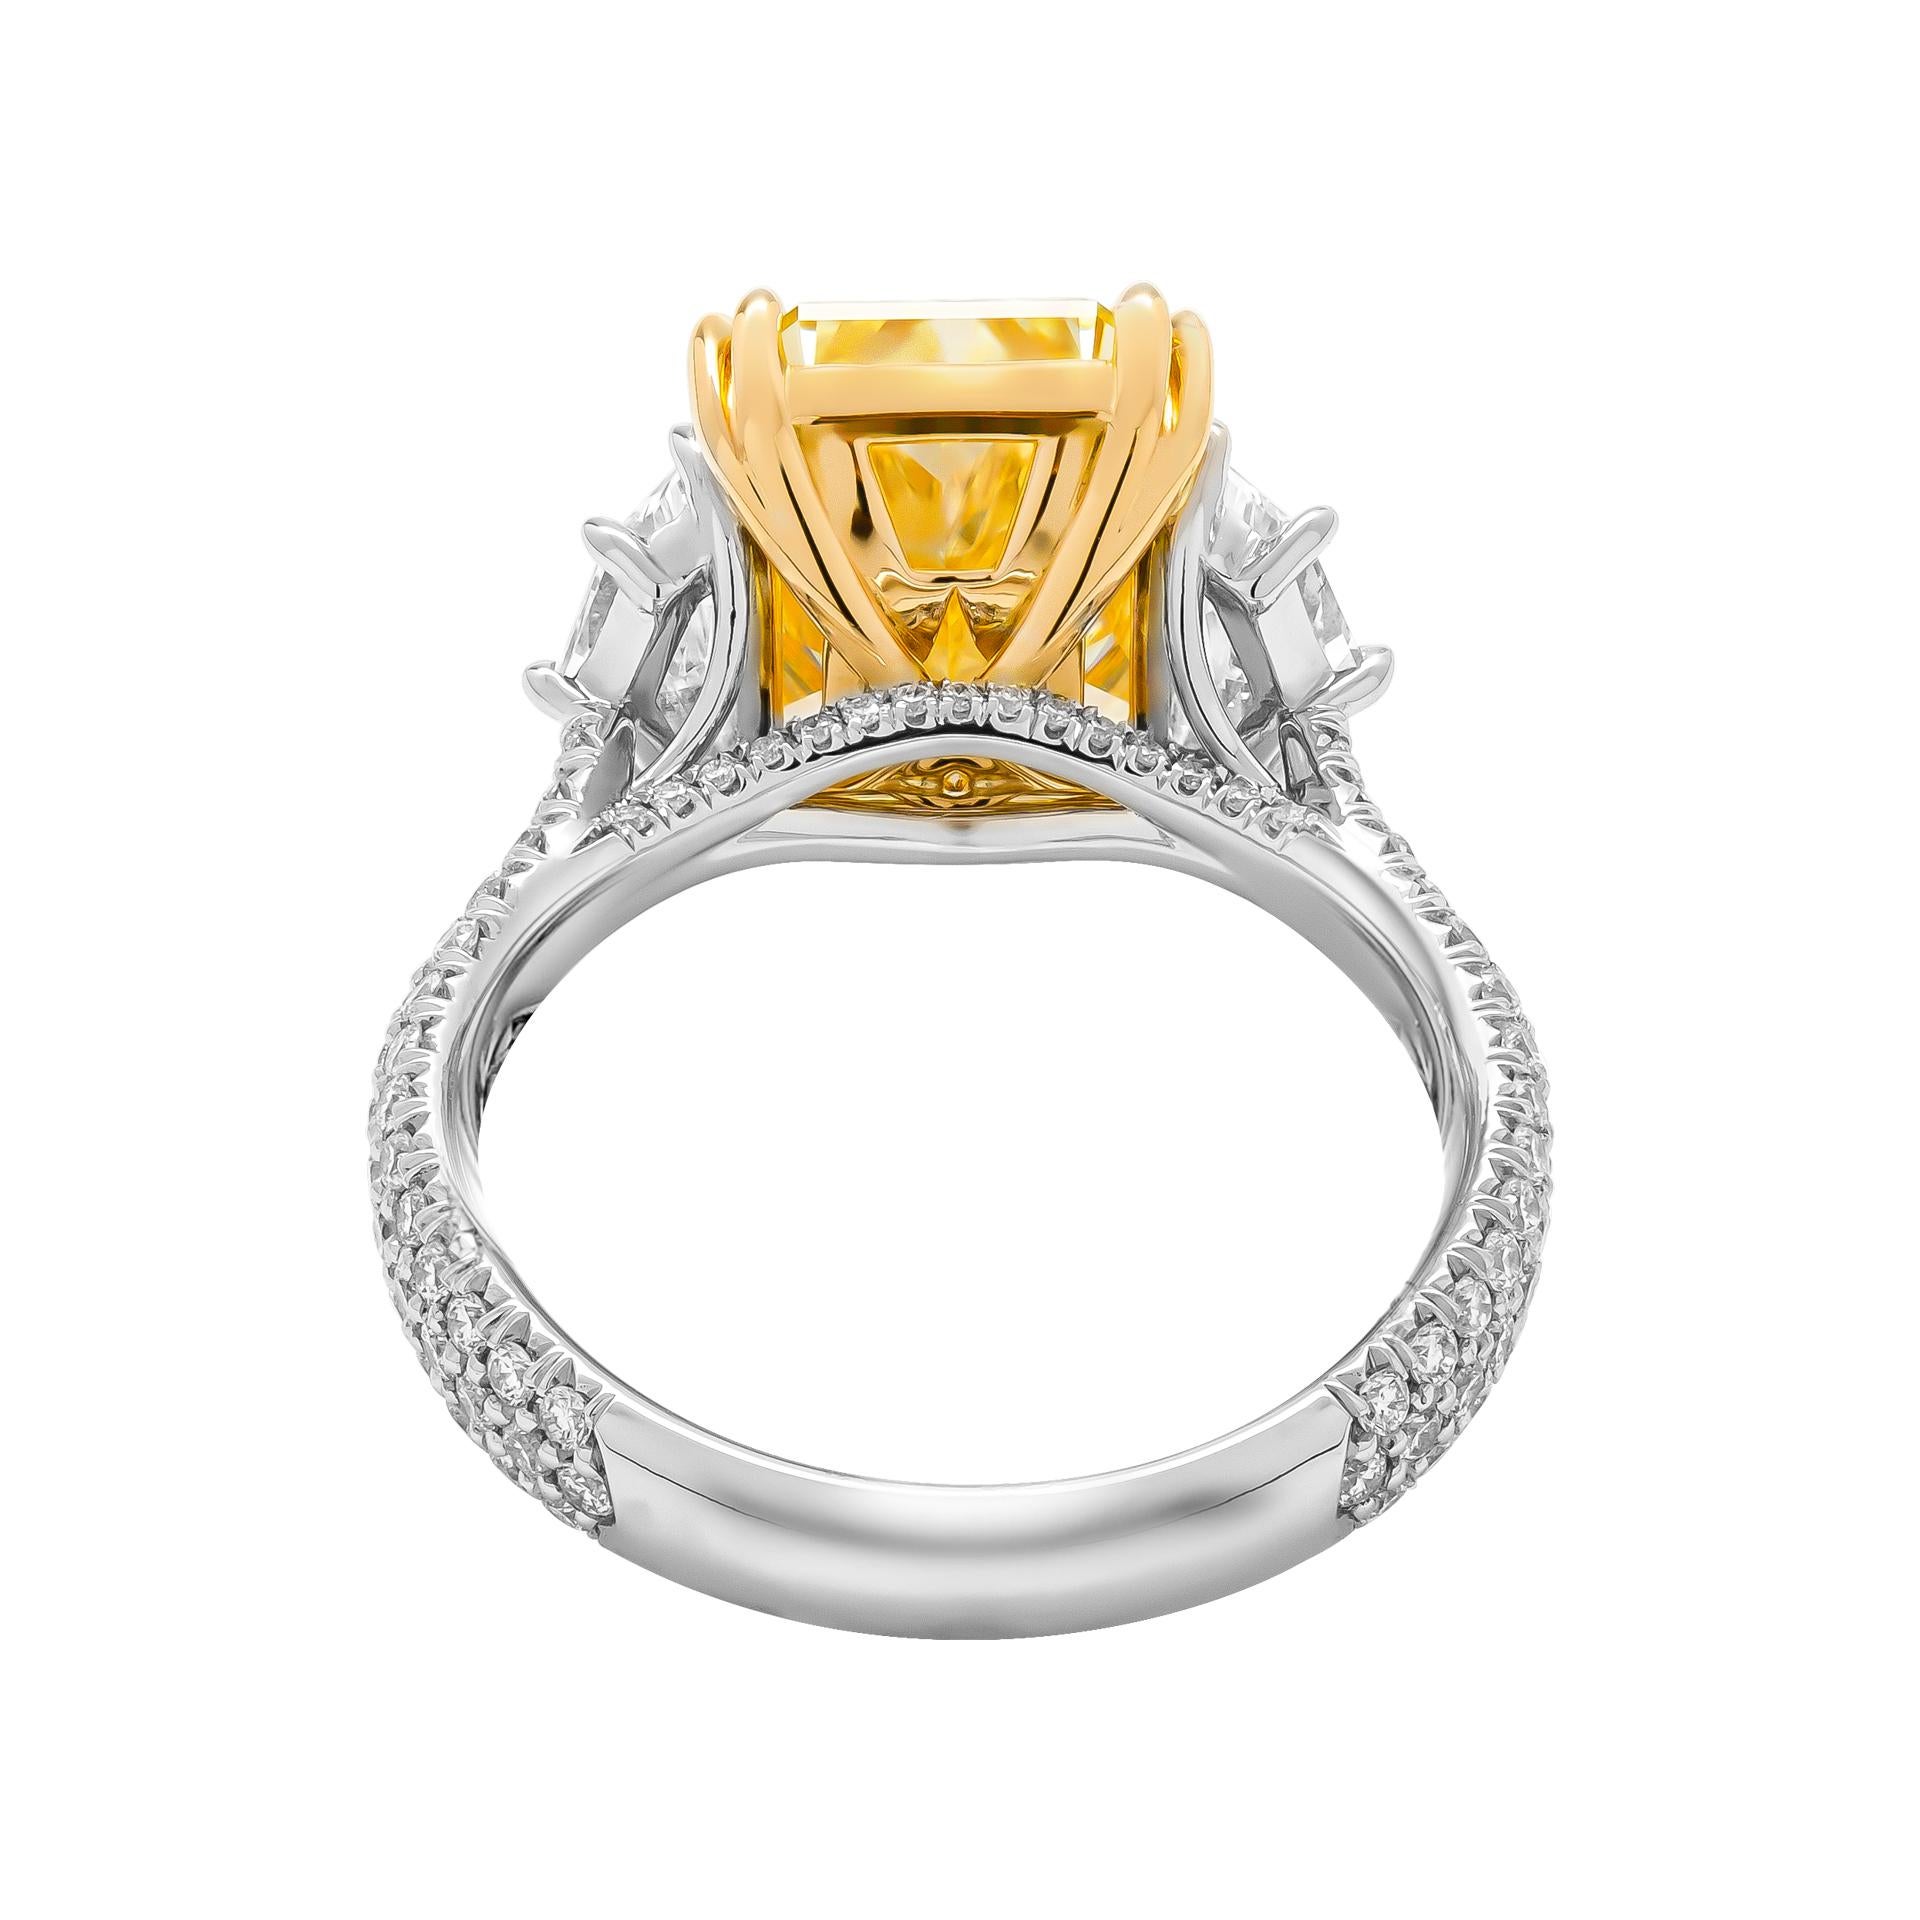 3 stone radiant cut diamond ring